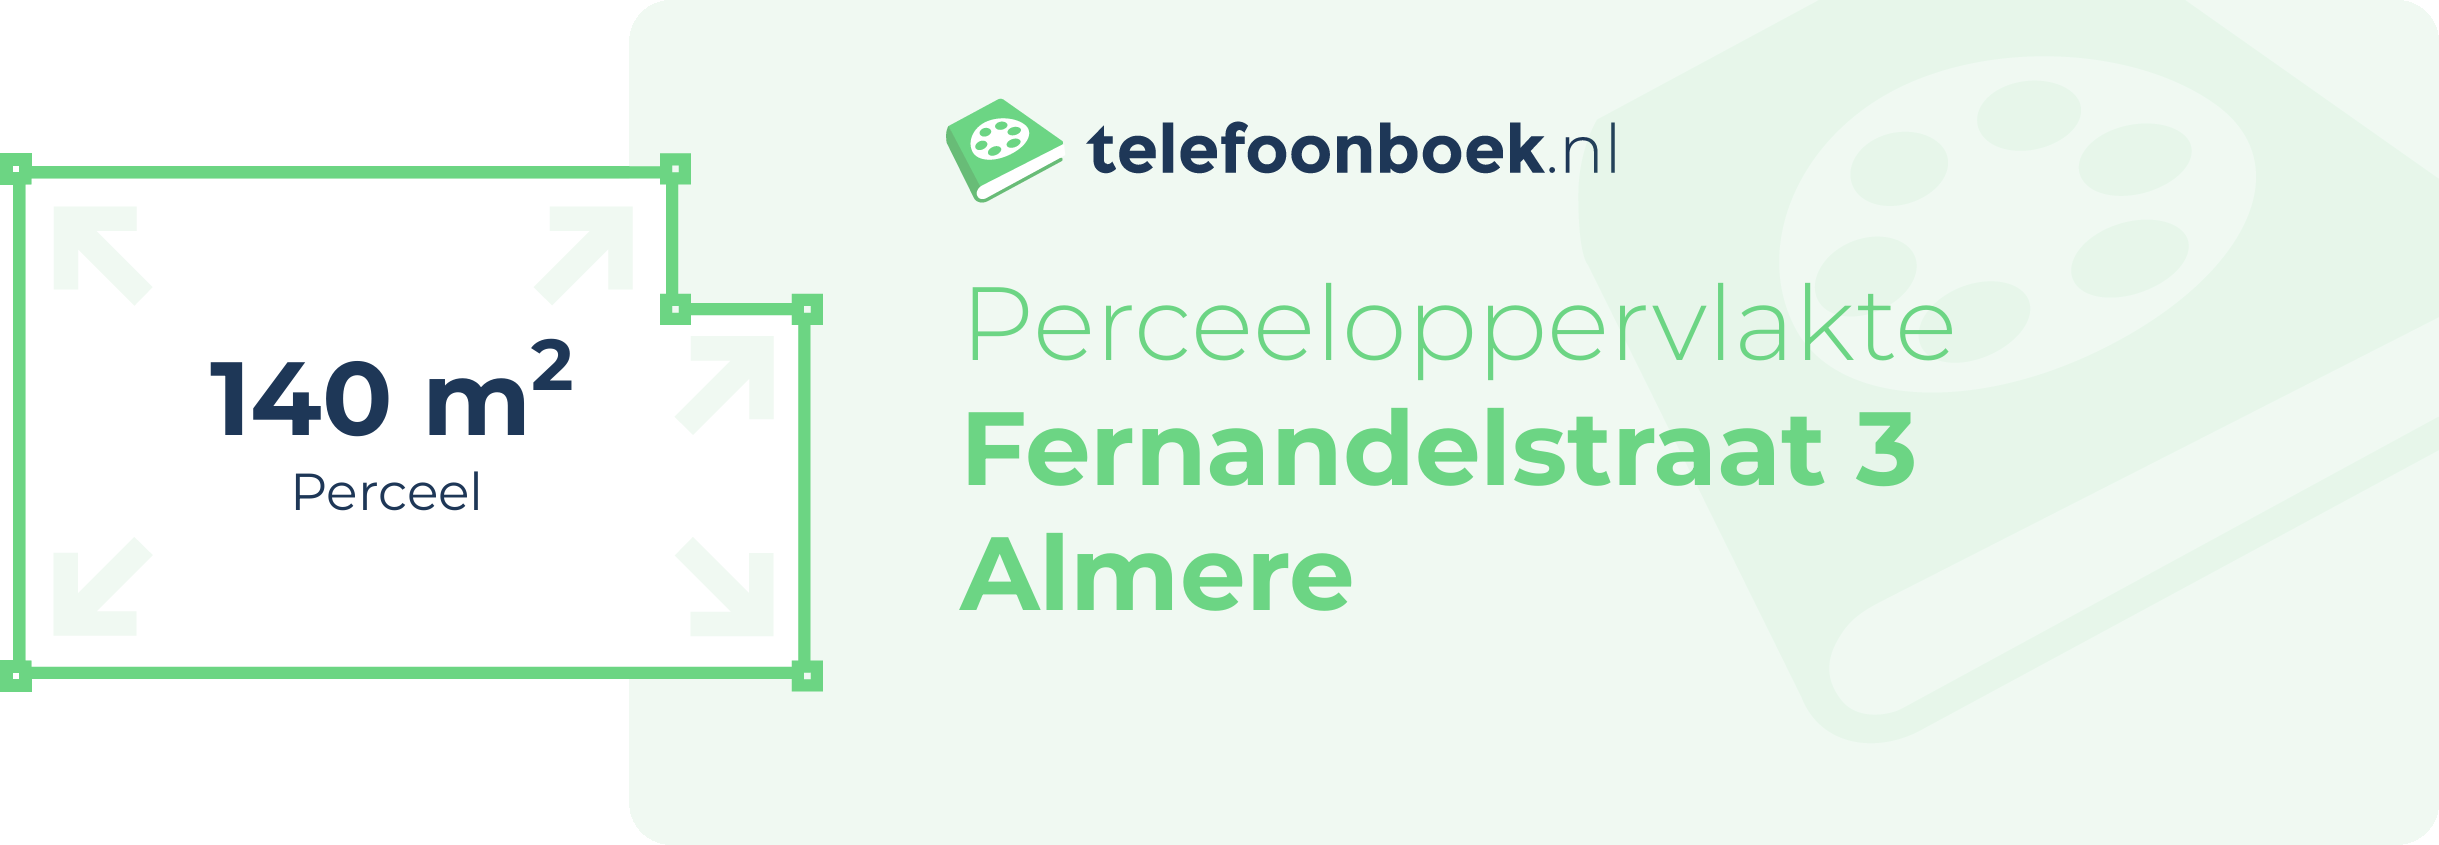 Perceeloppervlakte Fernandelstraat 3 Almere